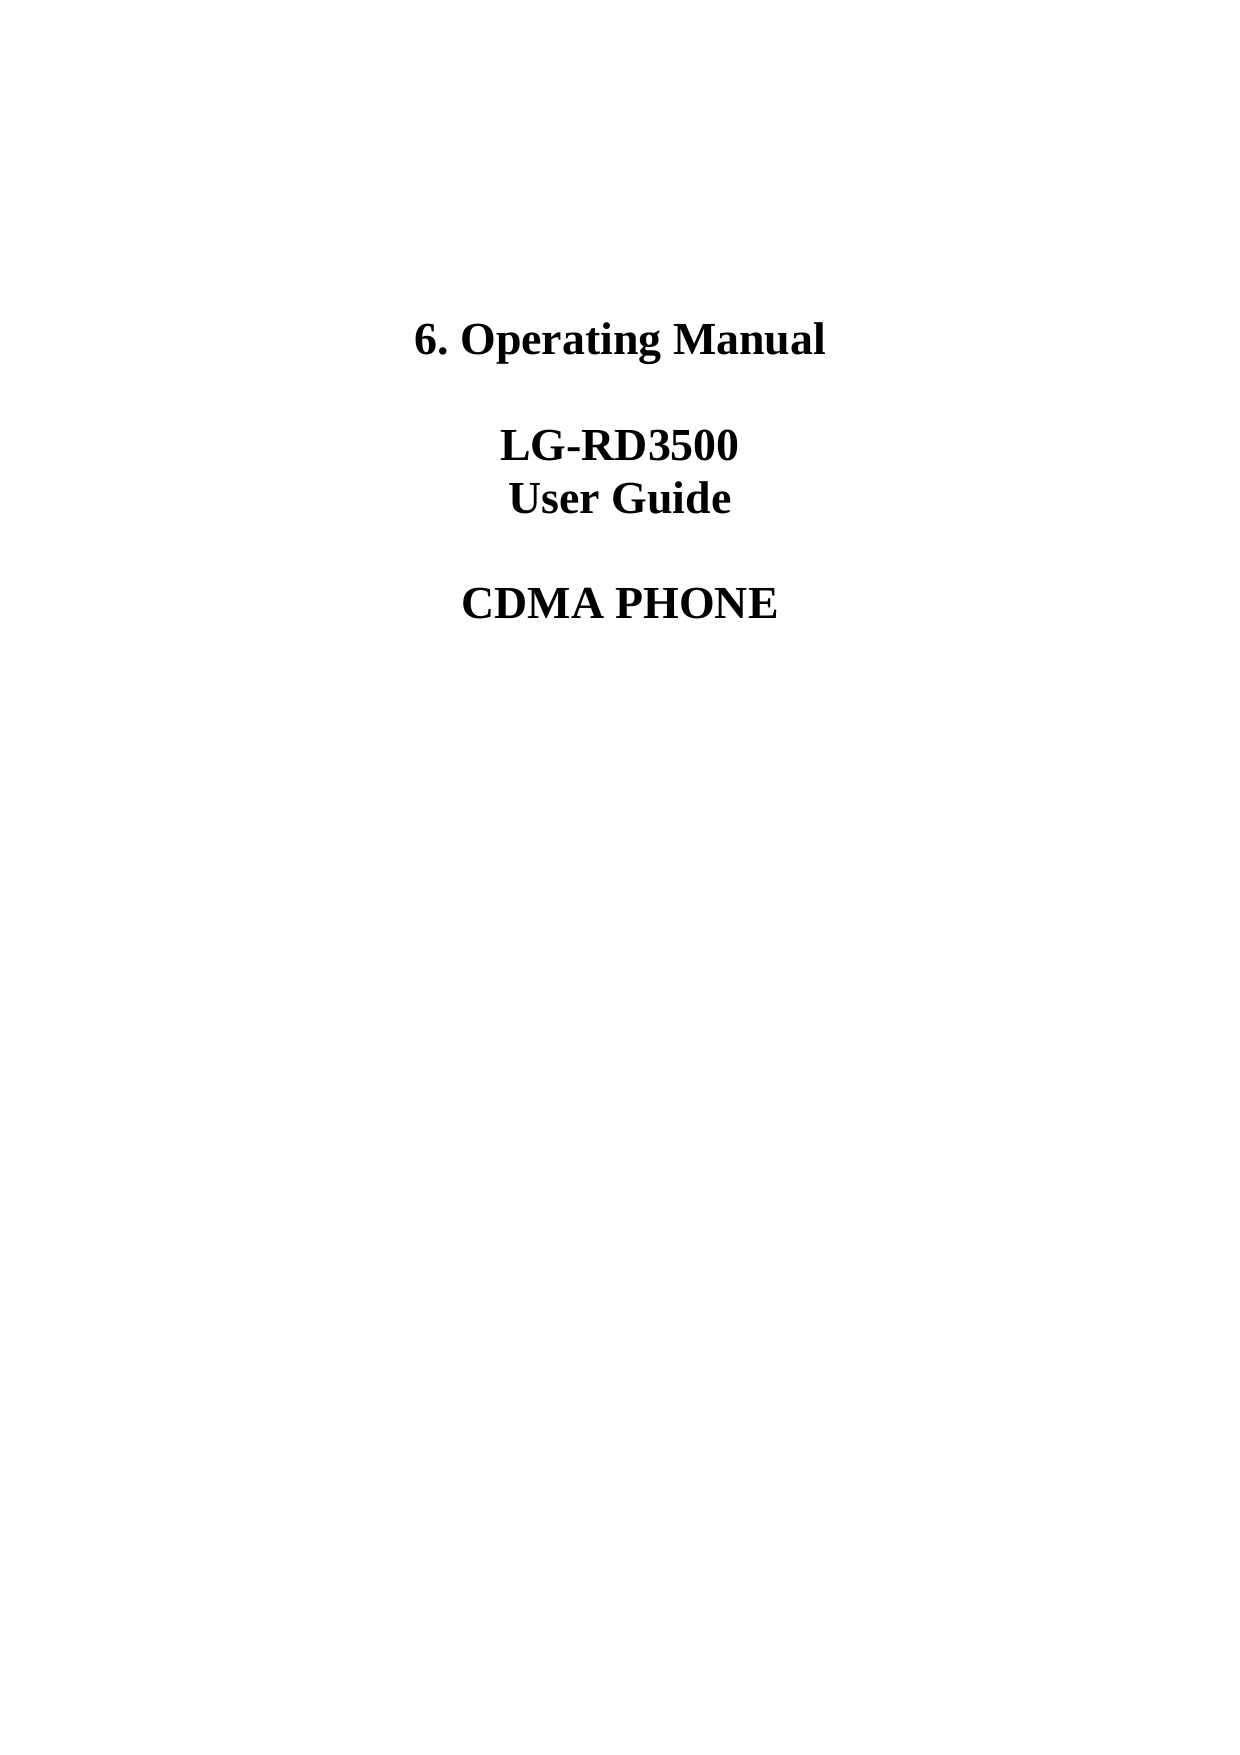   6. Operating Manual  LG-RD3500 User Guide  CDMA PHONE                          